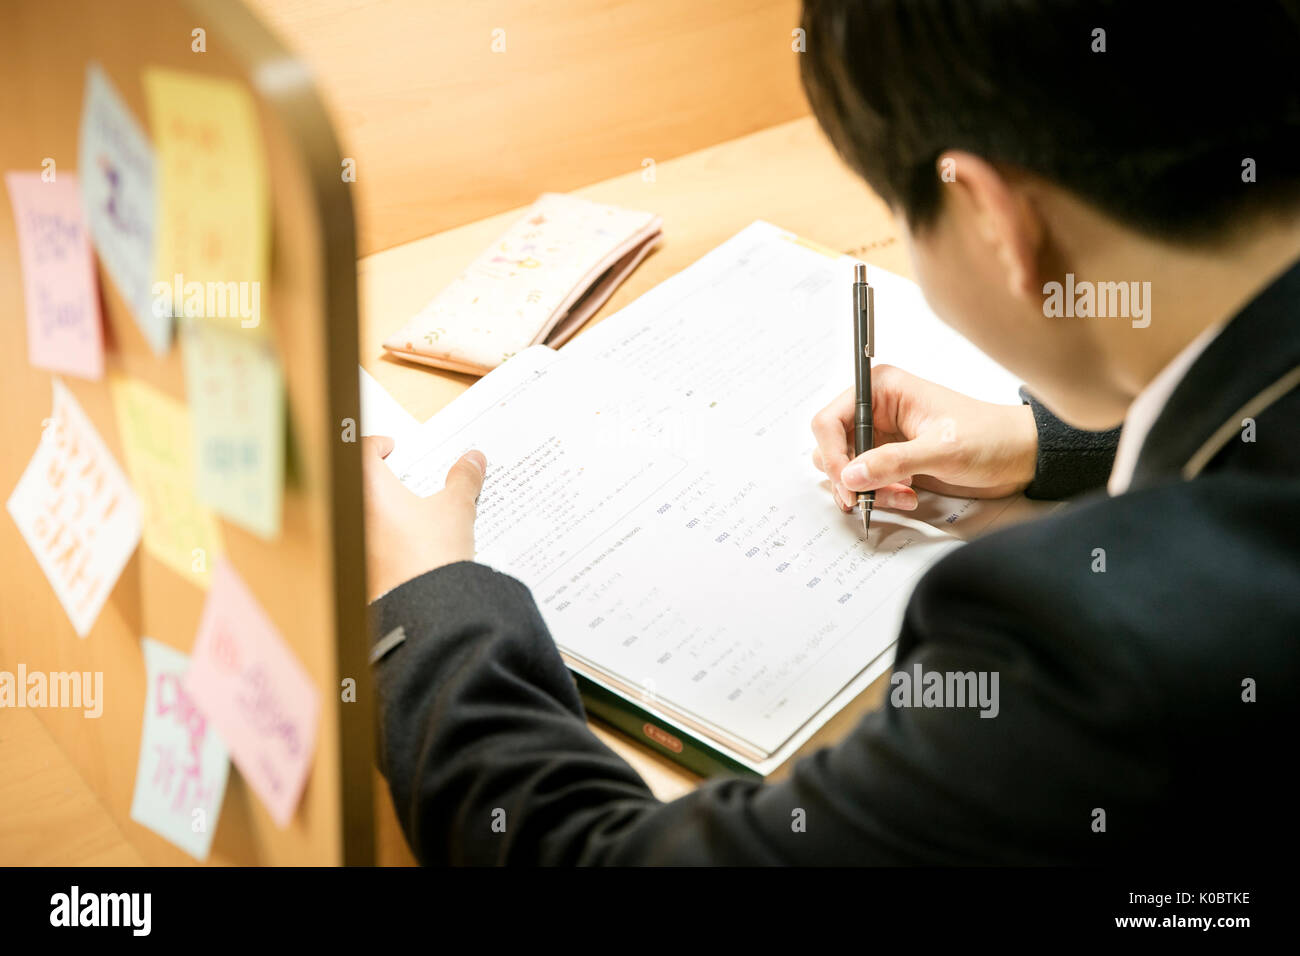 Side view portrait of school boy studying hard Stock Photo